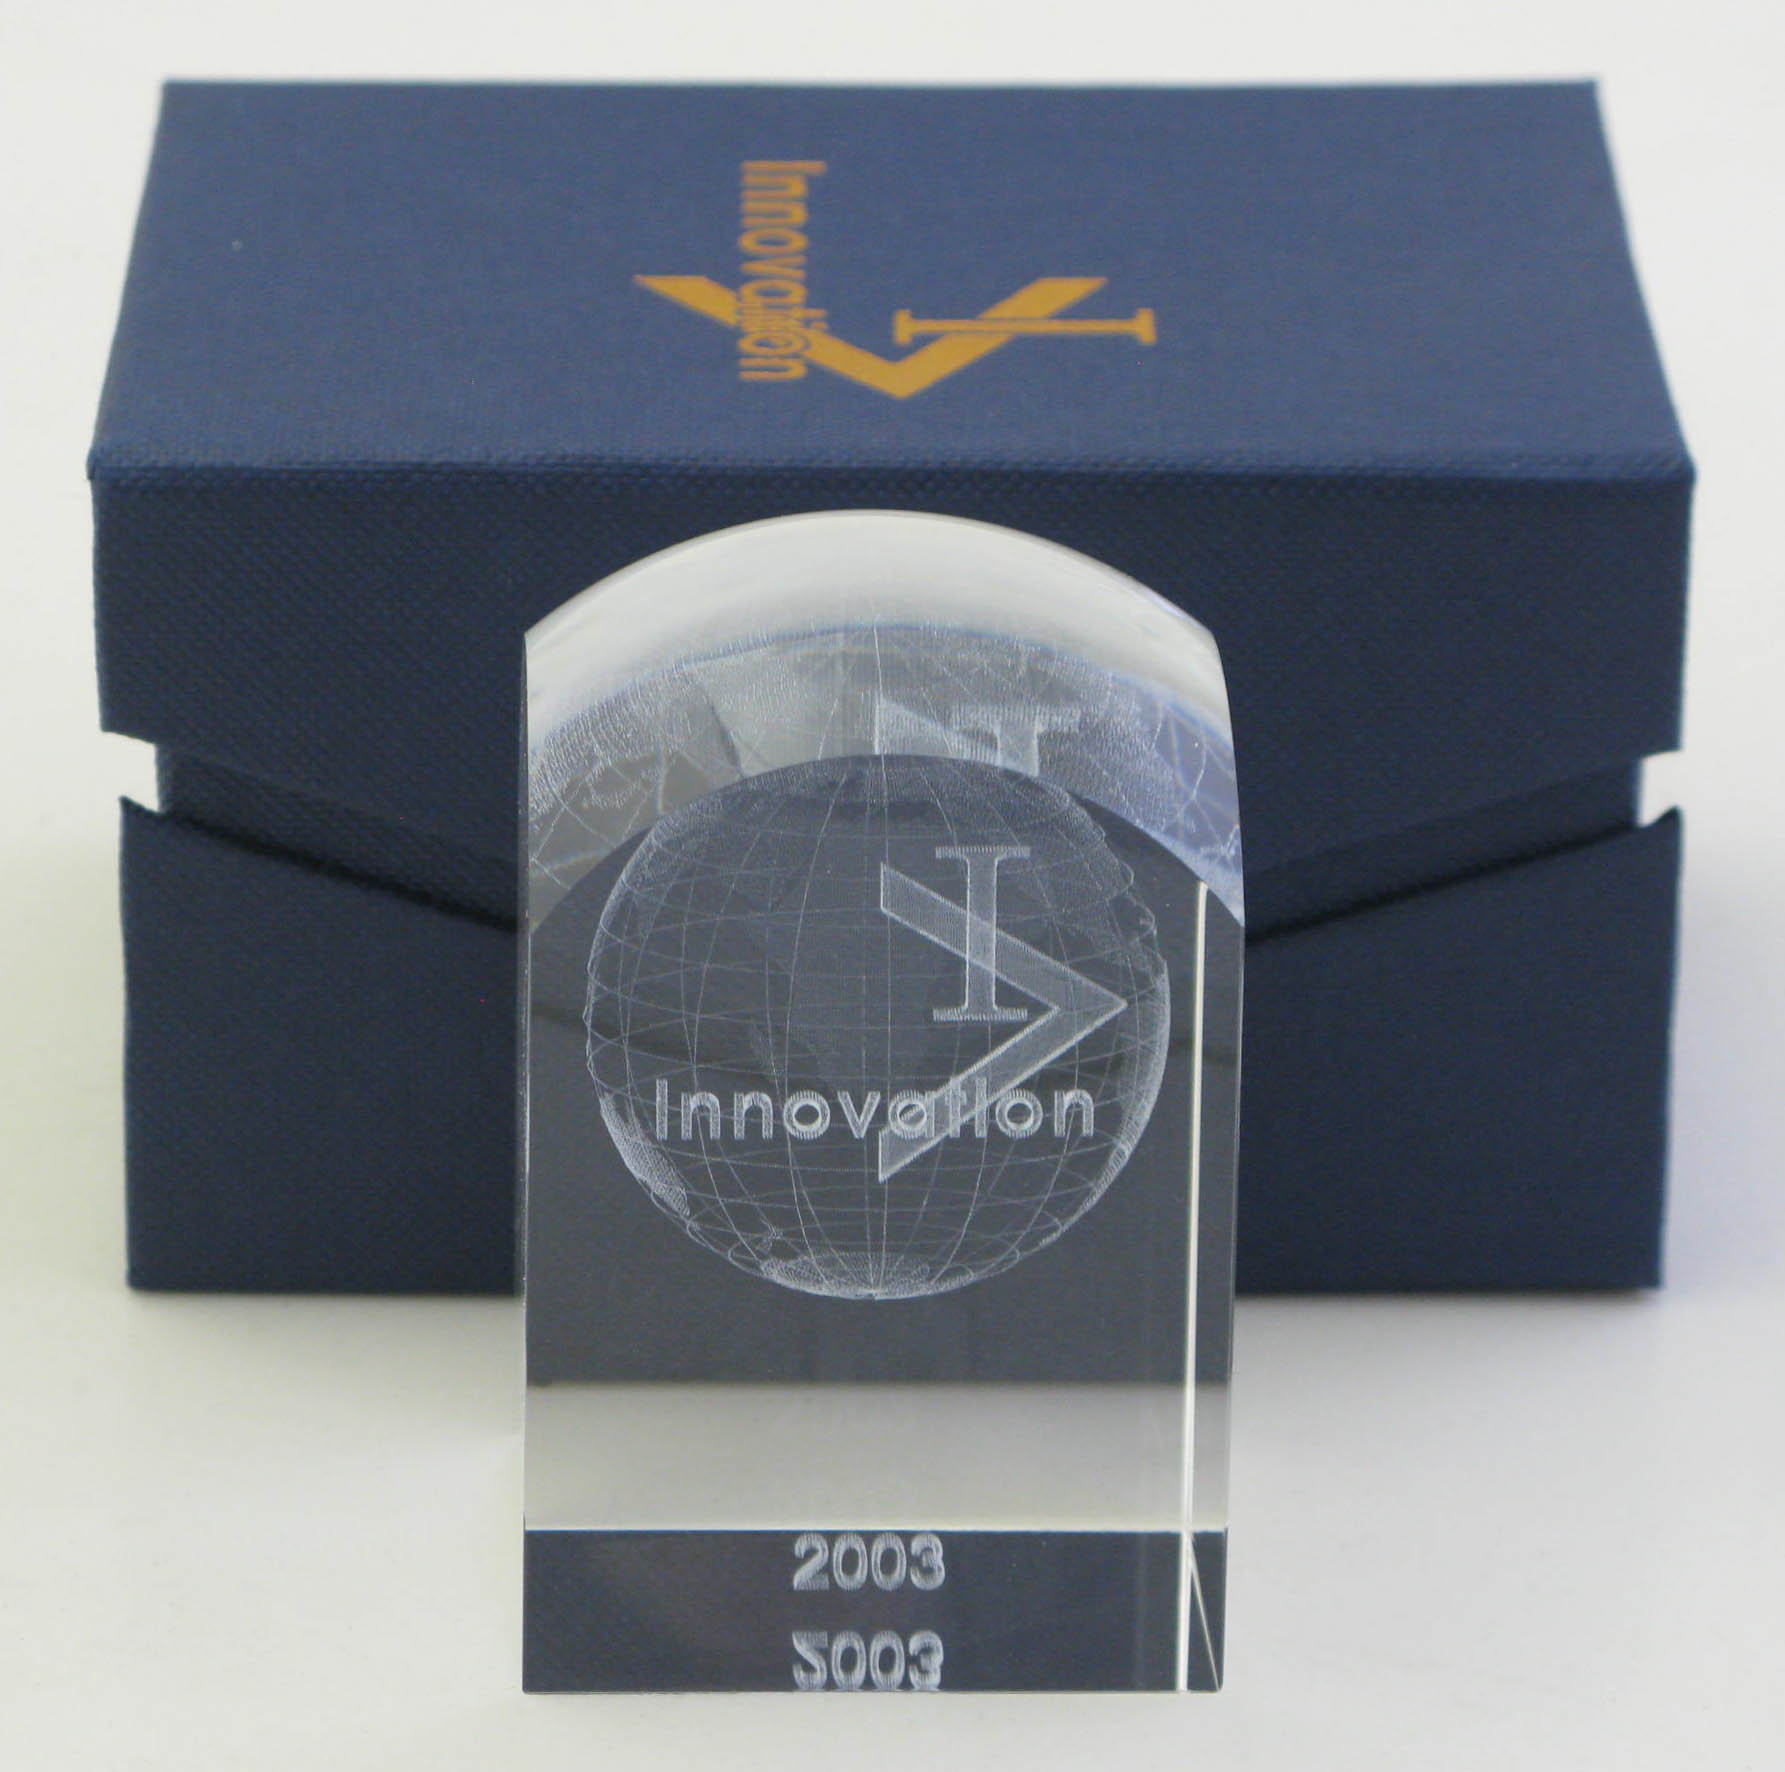 Chairman's Award for Innovation 2003